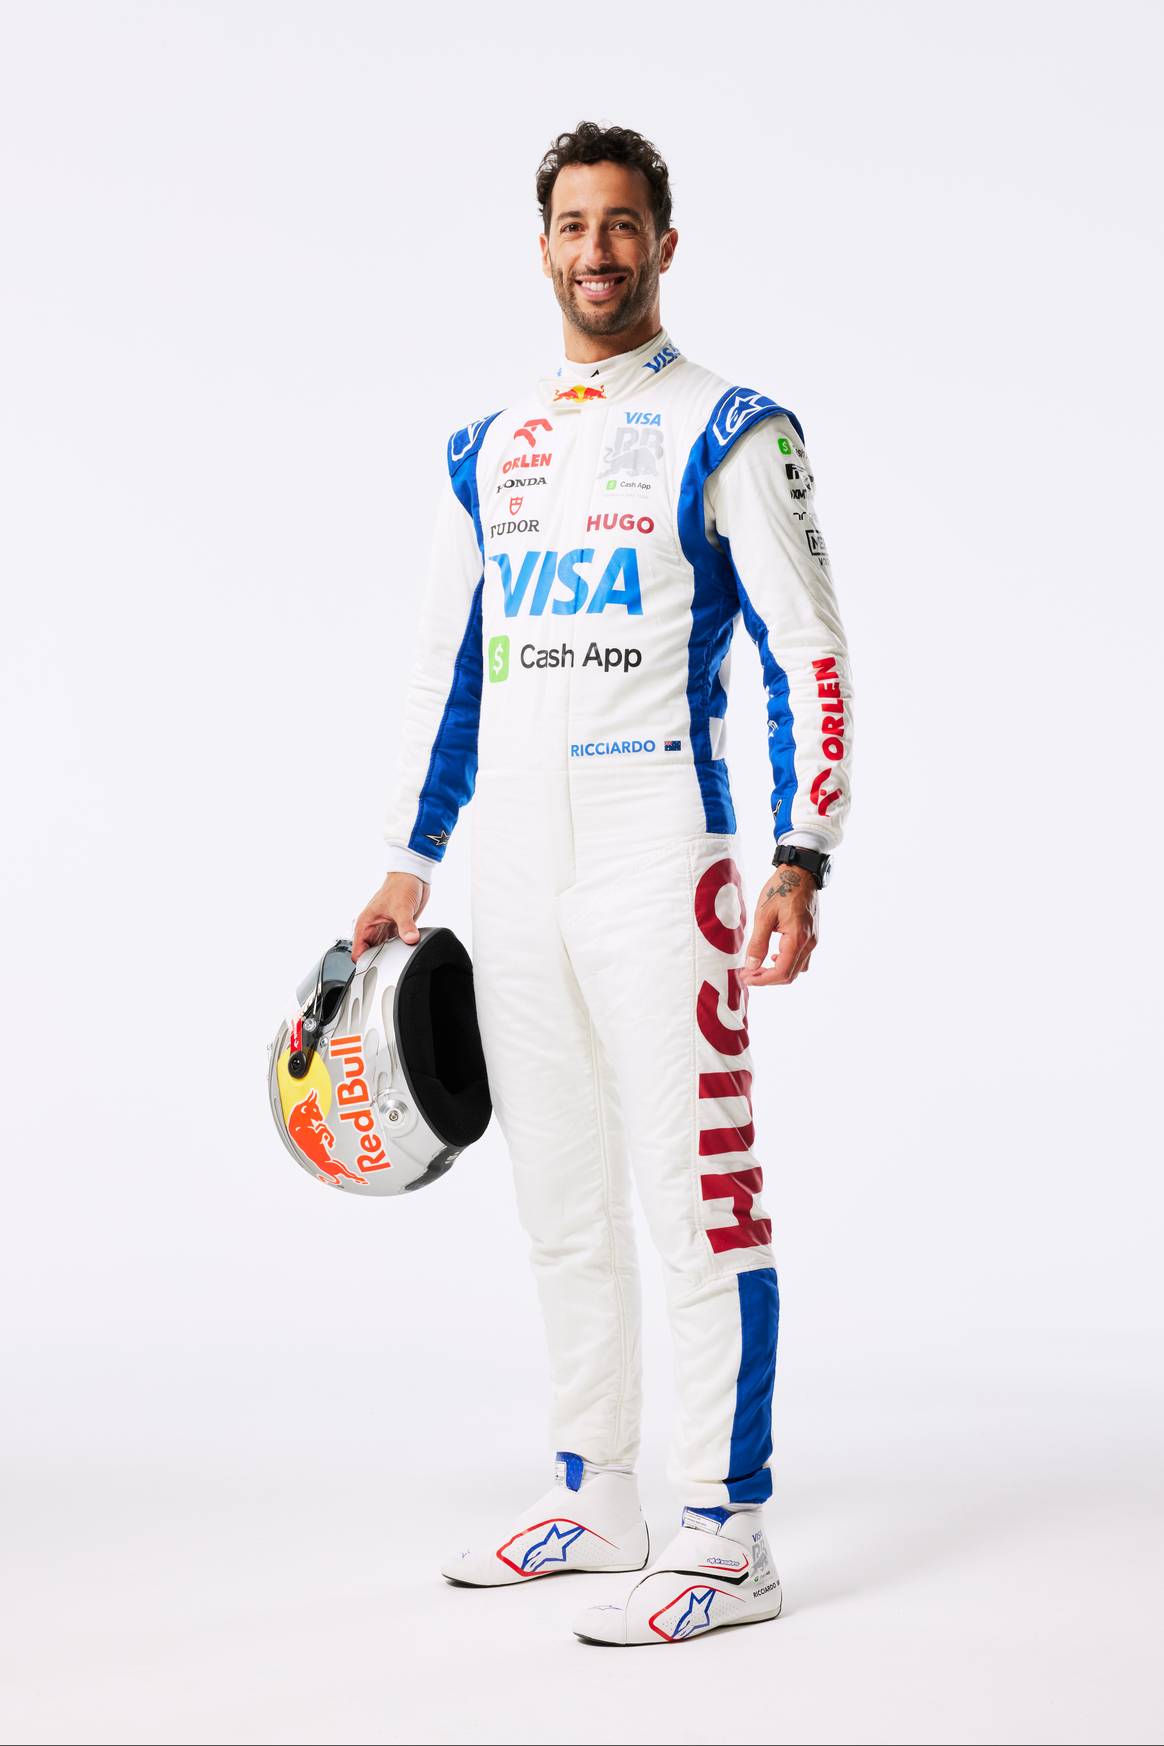 Hugo is the official apparel partner of Visa Cash App RB F1 team – Daniel Ricciardo